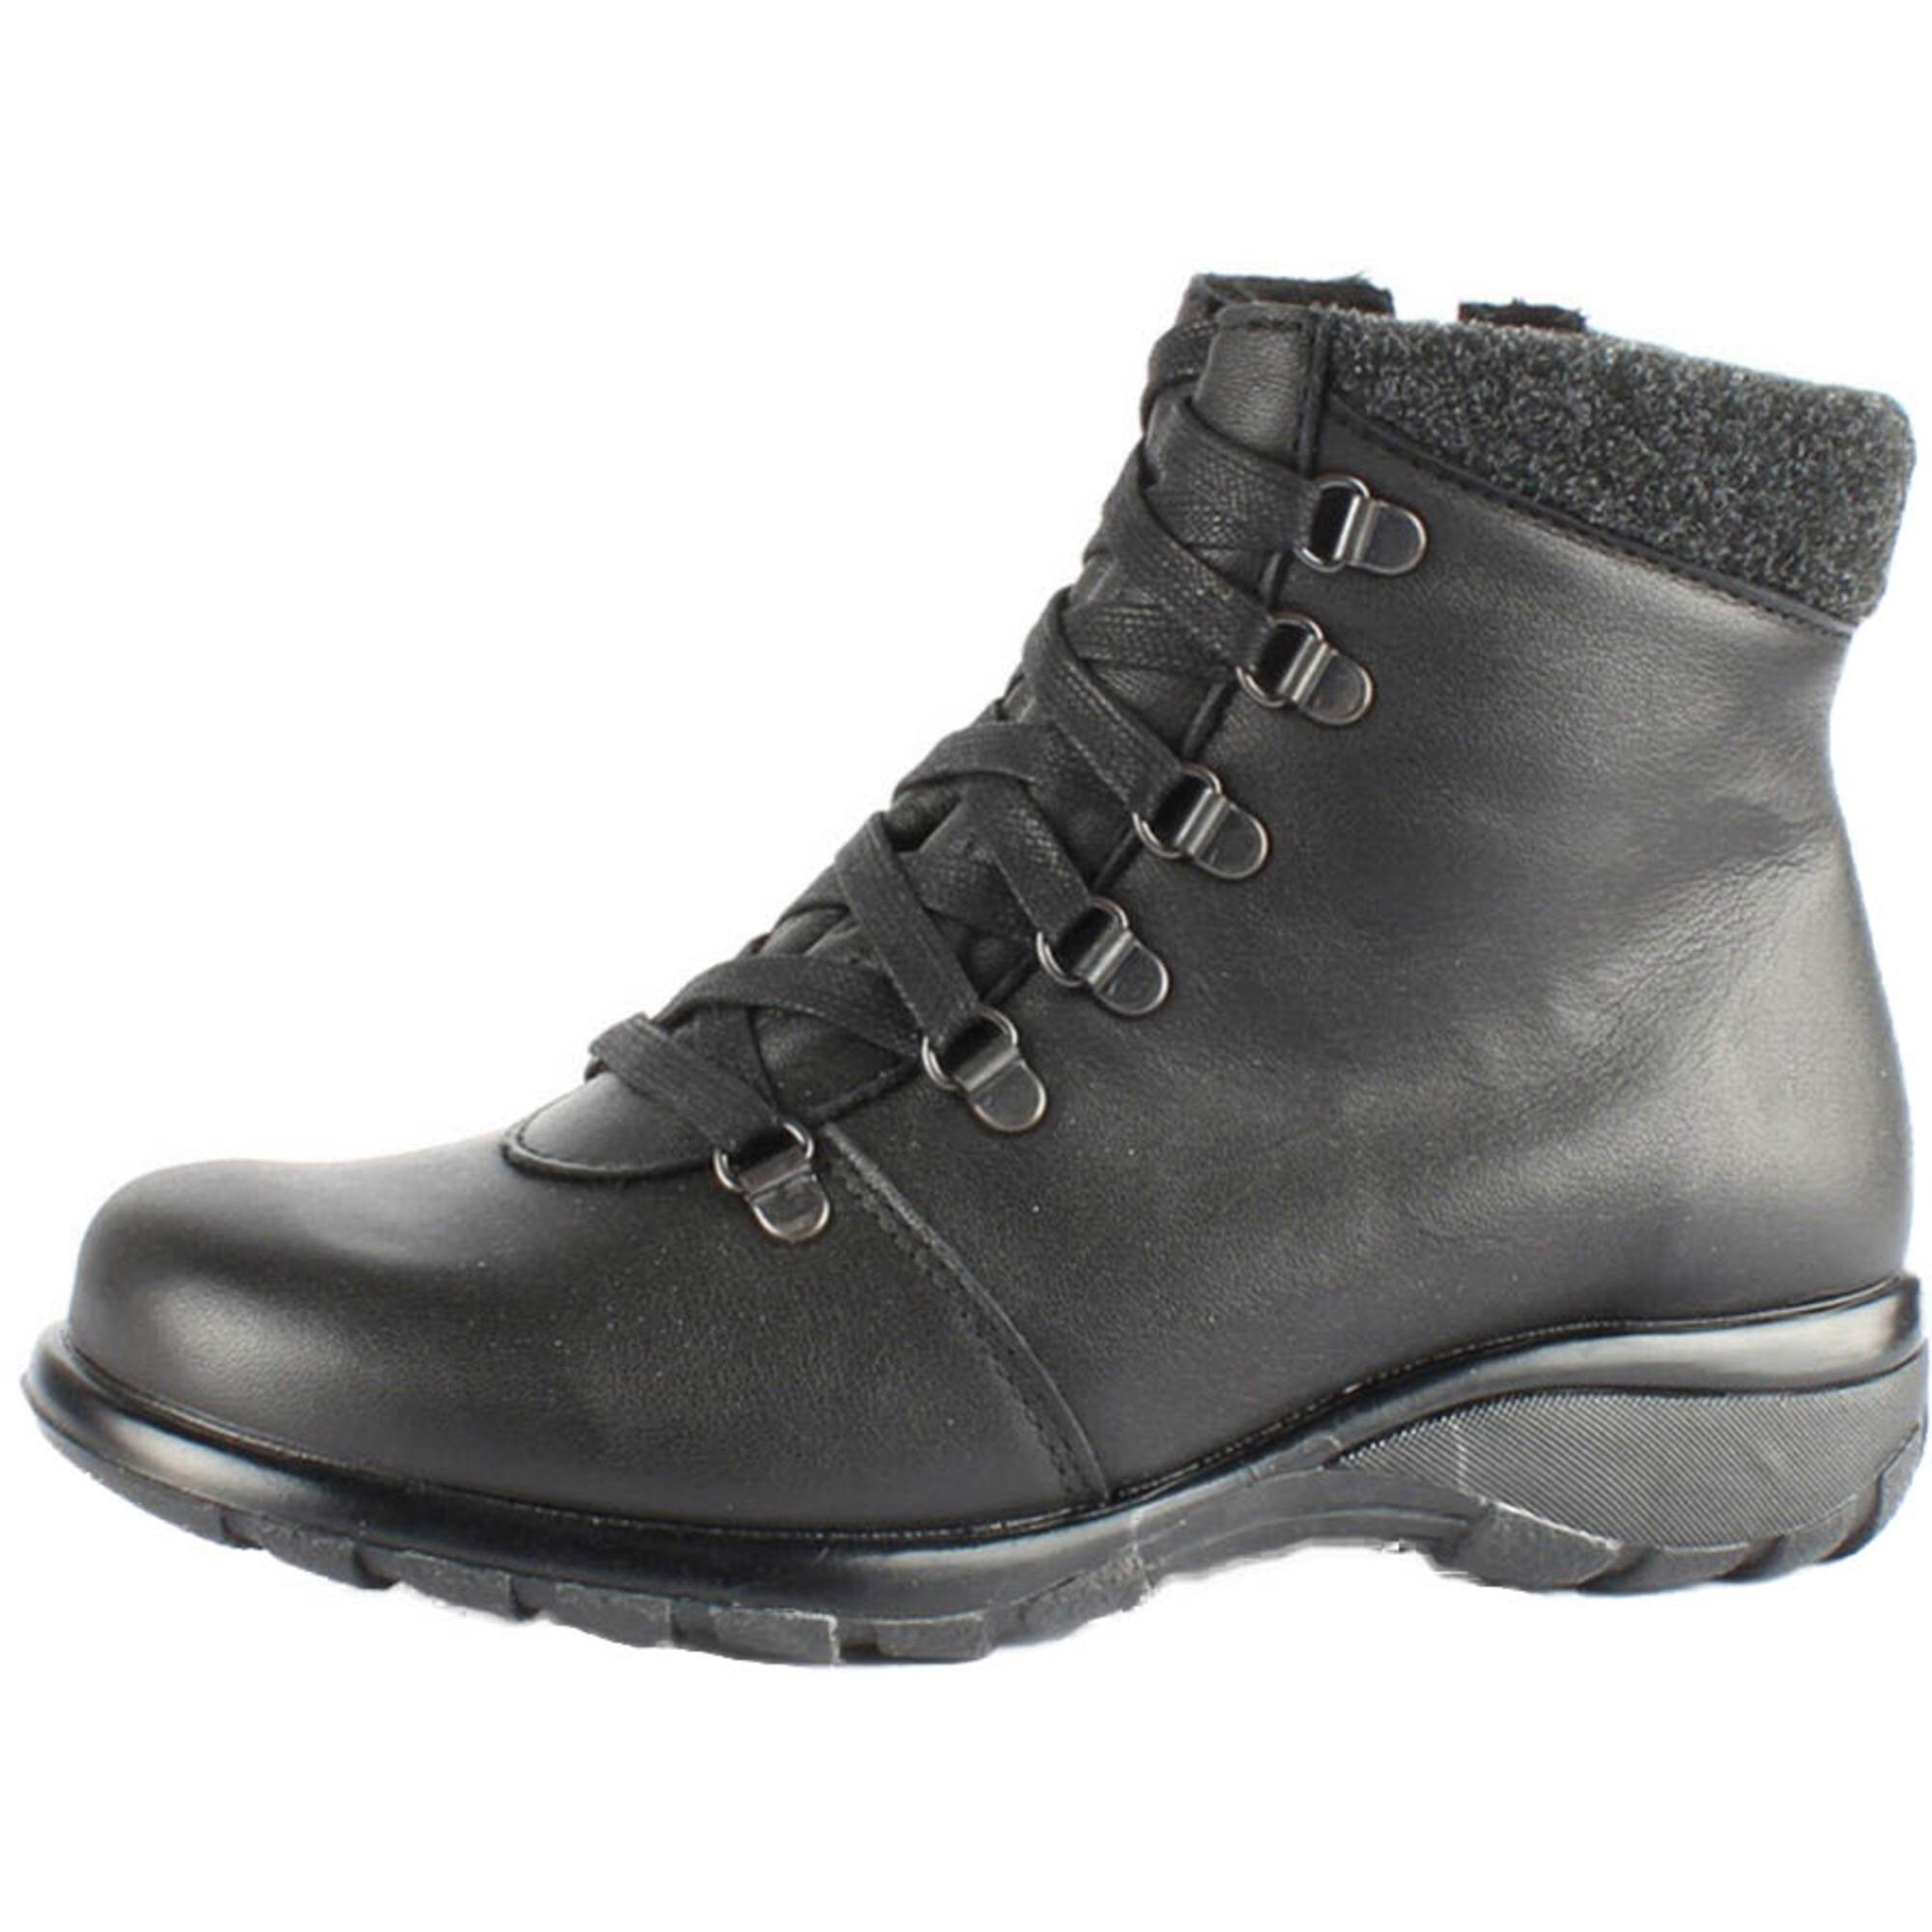 waterproof black ankle boots